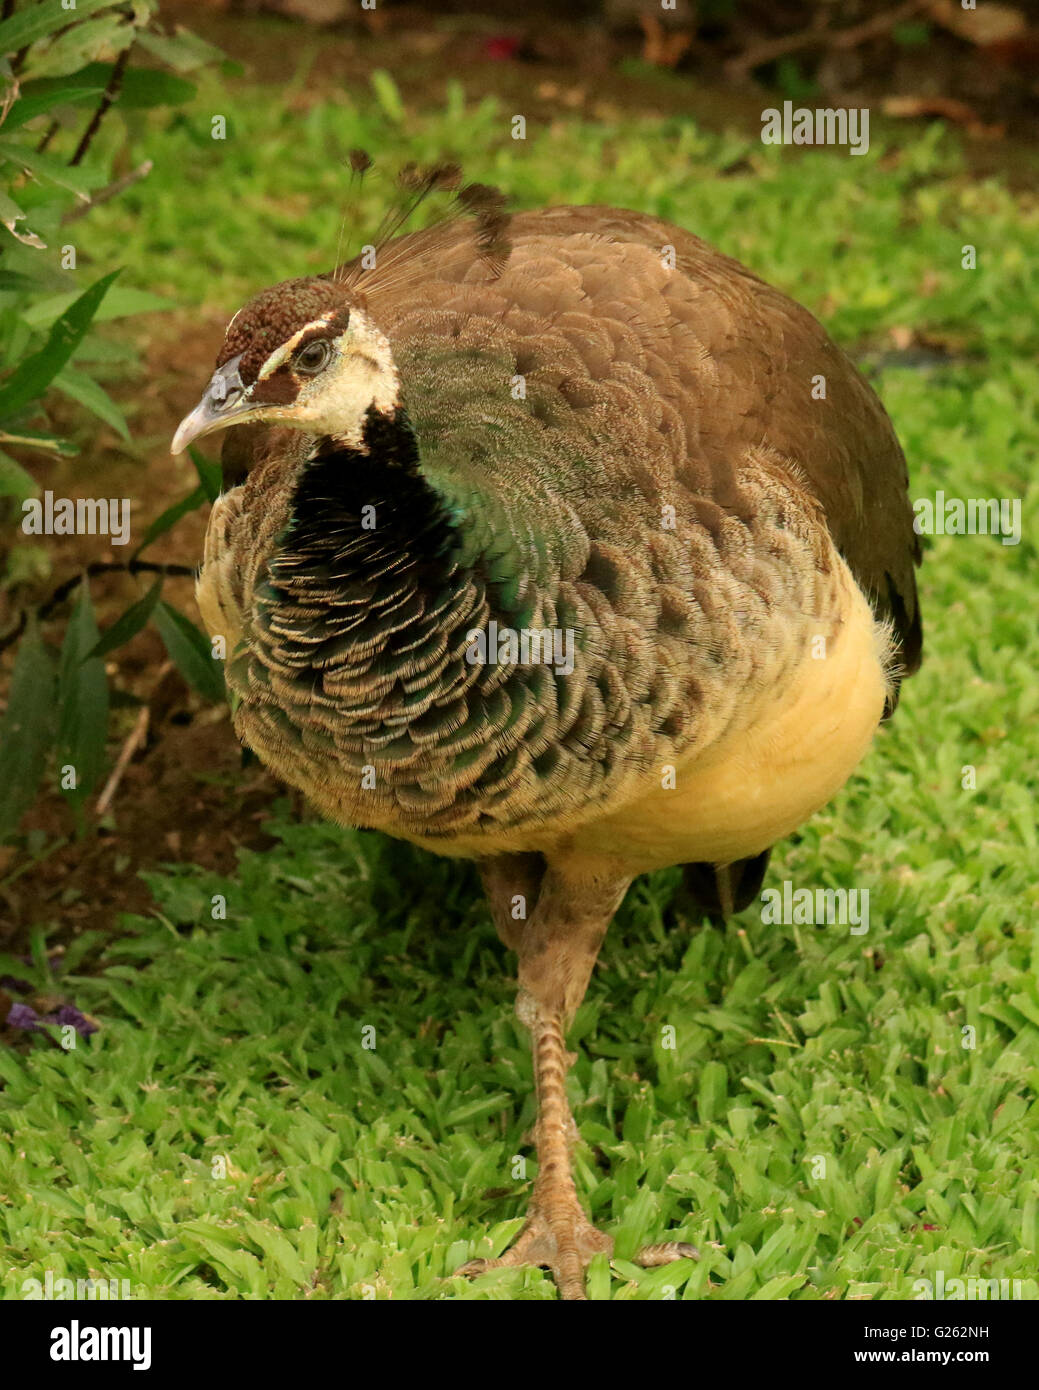 Wild peafowl or female peacock in Jamaica Stock Photo